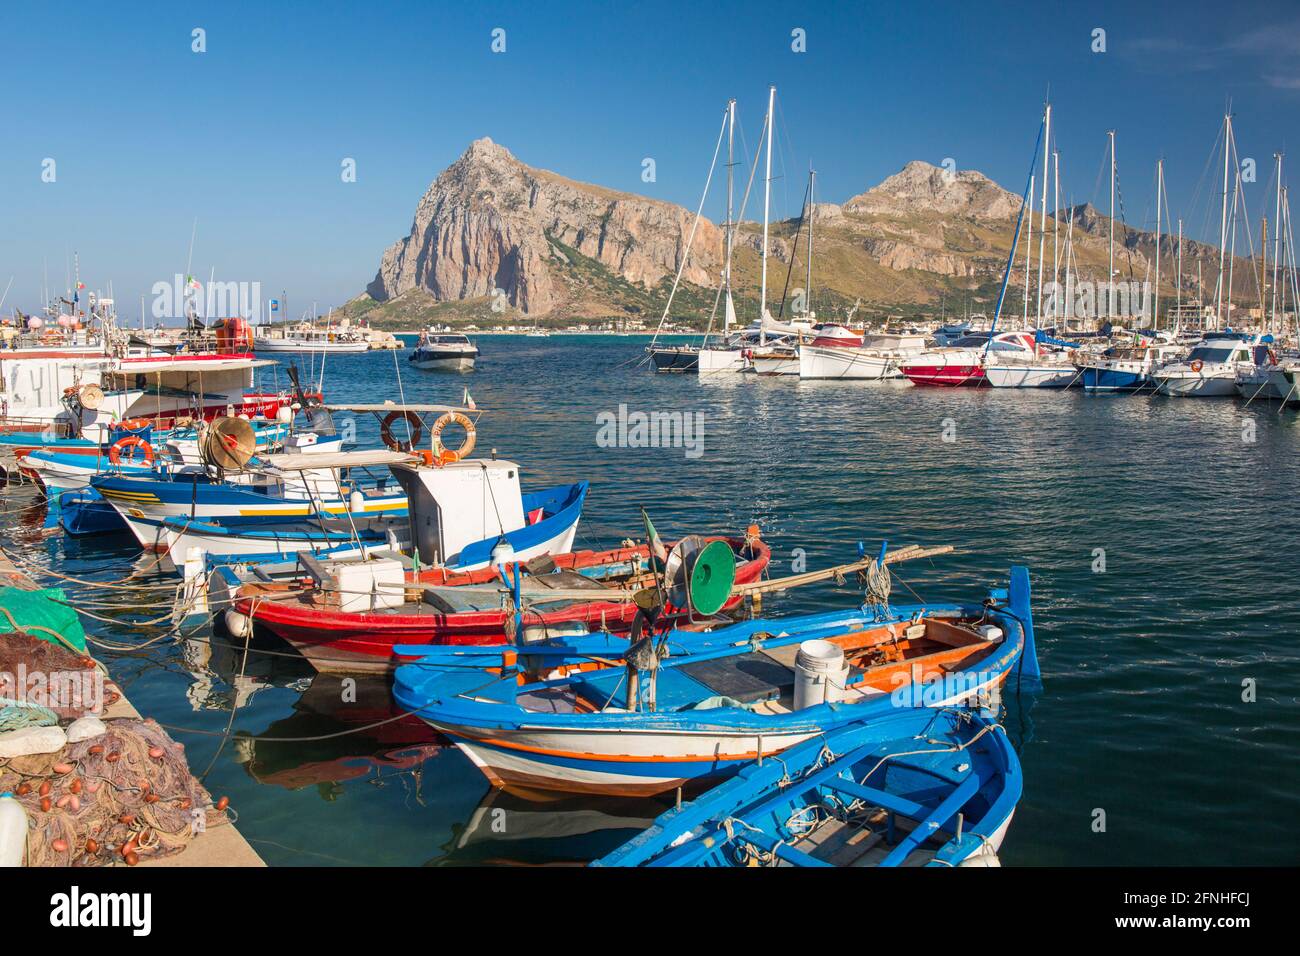 San Vito Lo Capo, Trapani, Sicily, Italy. View across colourful harbour to the towering peaks of Monte Monaco and Pizzo di Sella. Stock Photo